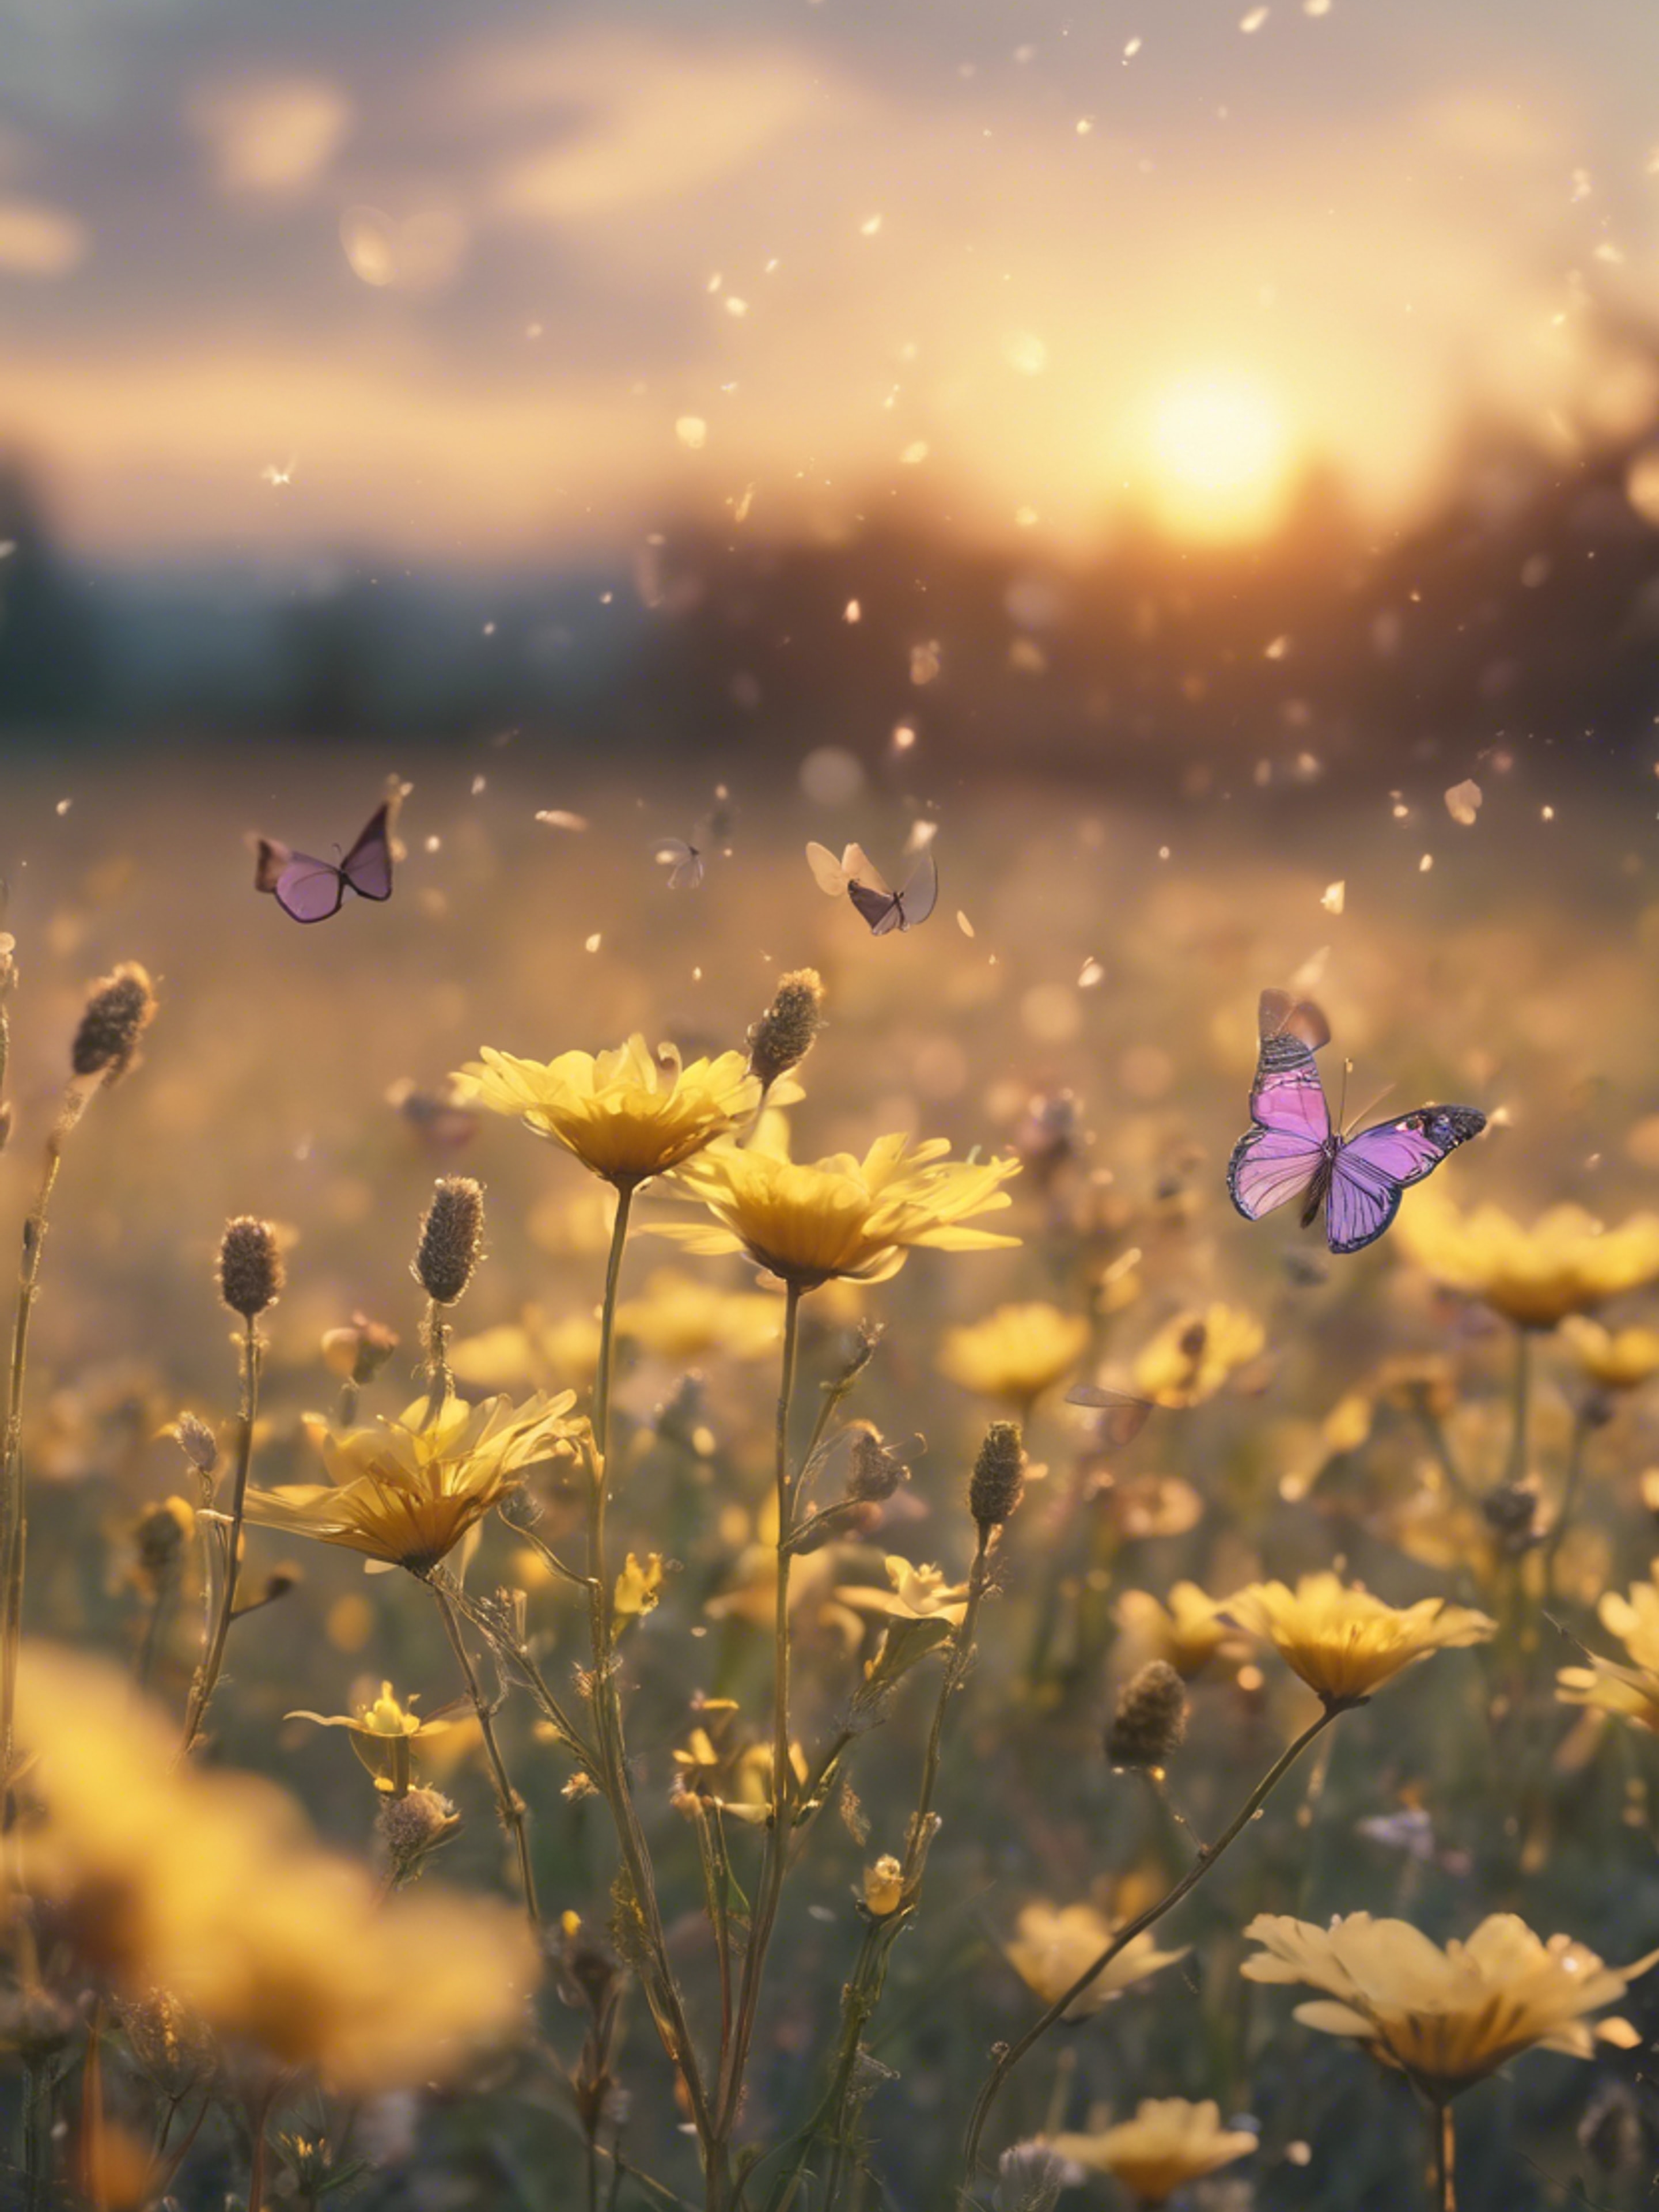 Sunset scene overlooking a meadow filled with pastel yellow flowers and kawaii butterflies fluttering above them. Tapeta[4de922e1f50d428d8d1a]